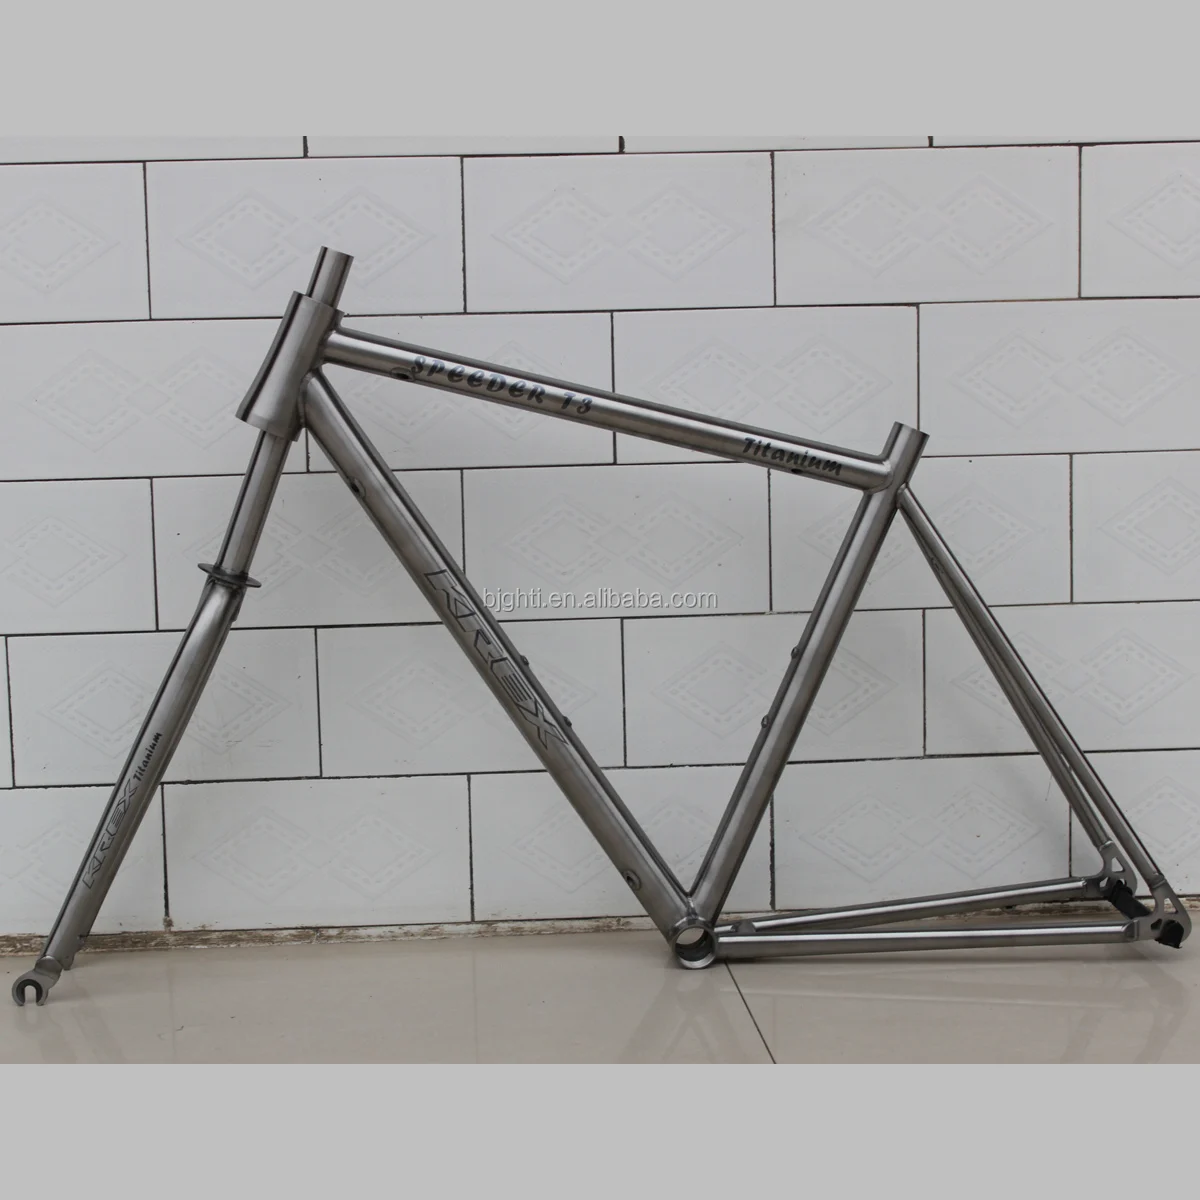 titanium road bike frame for sale